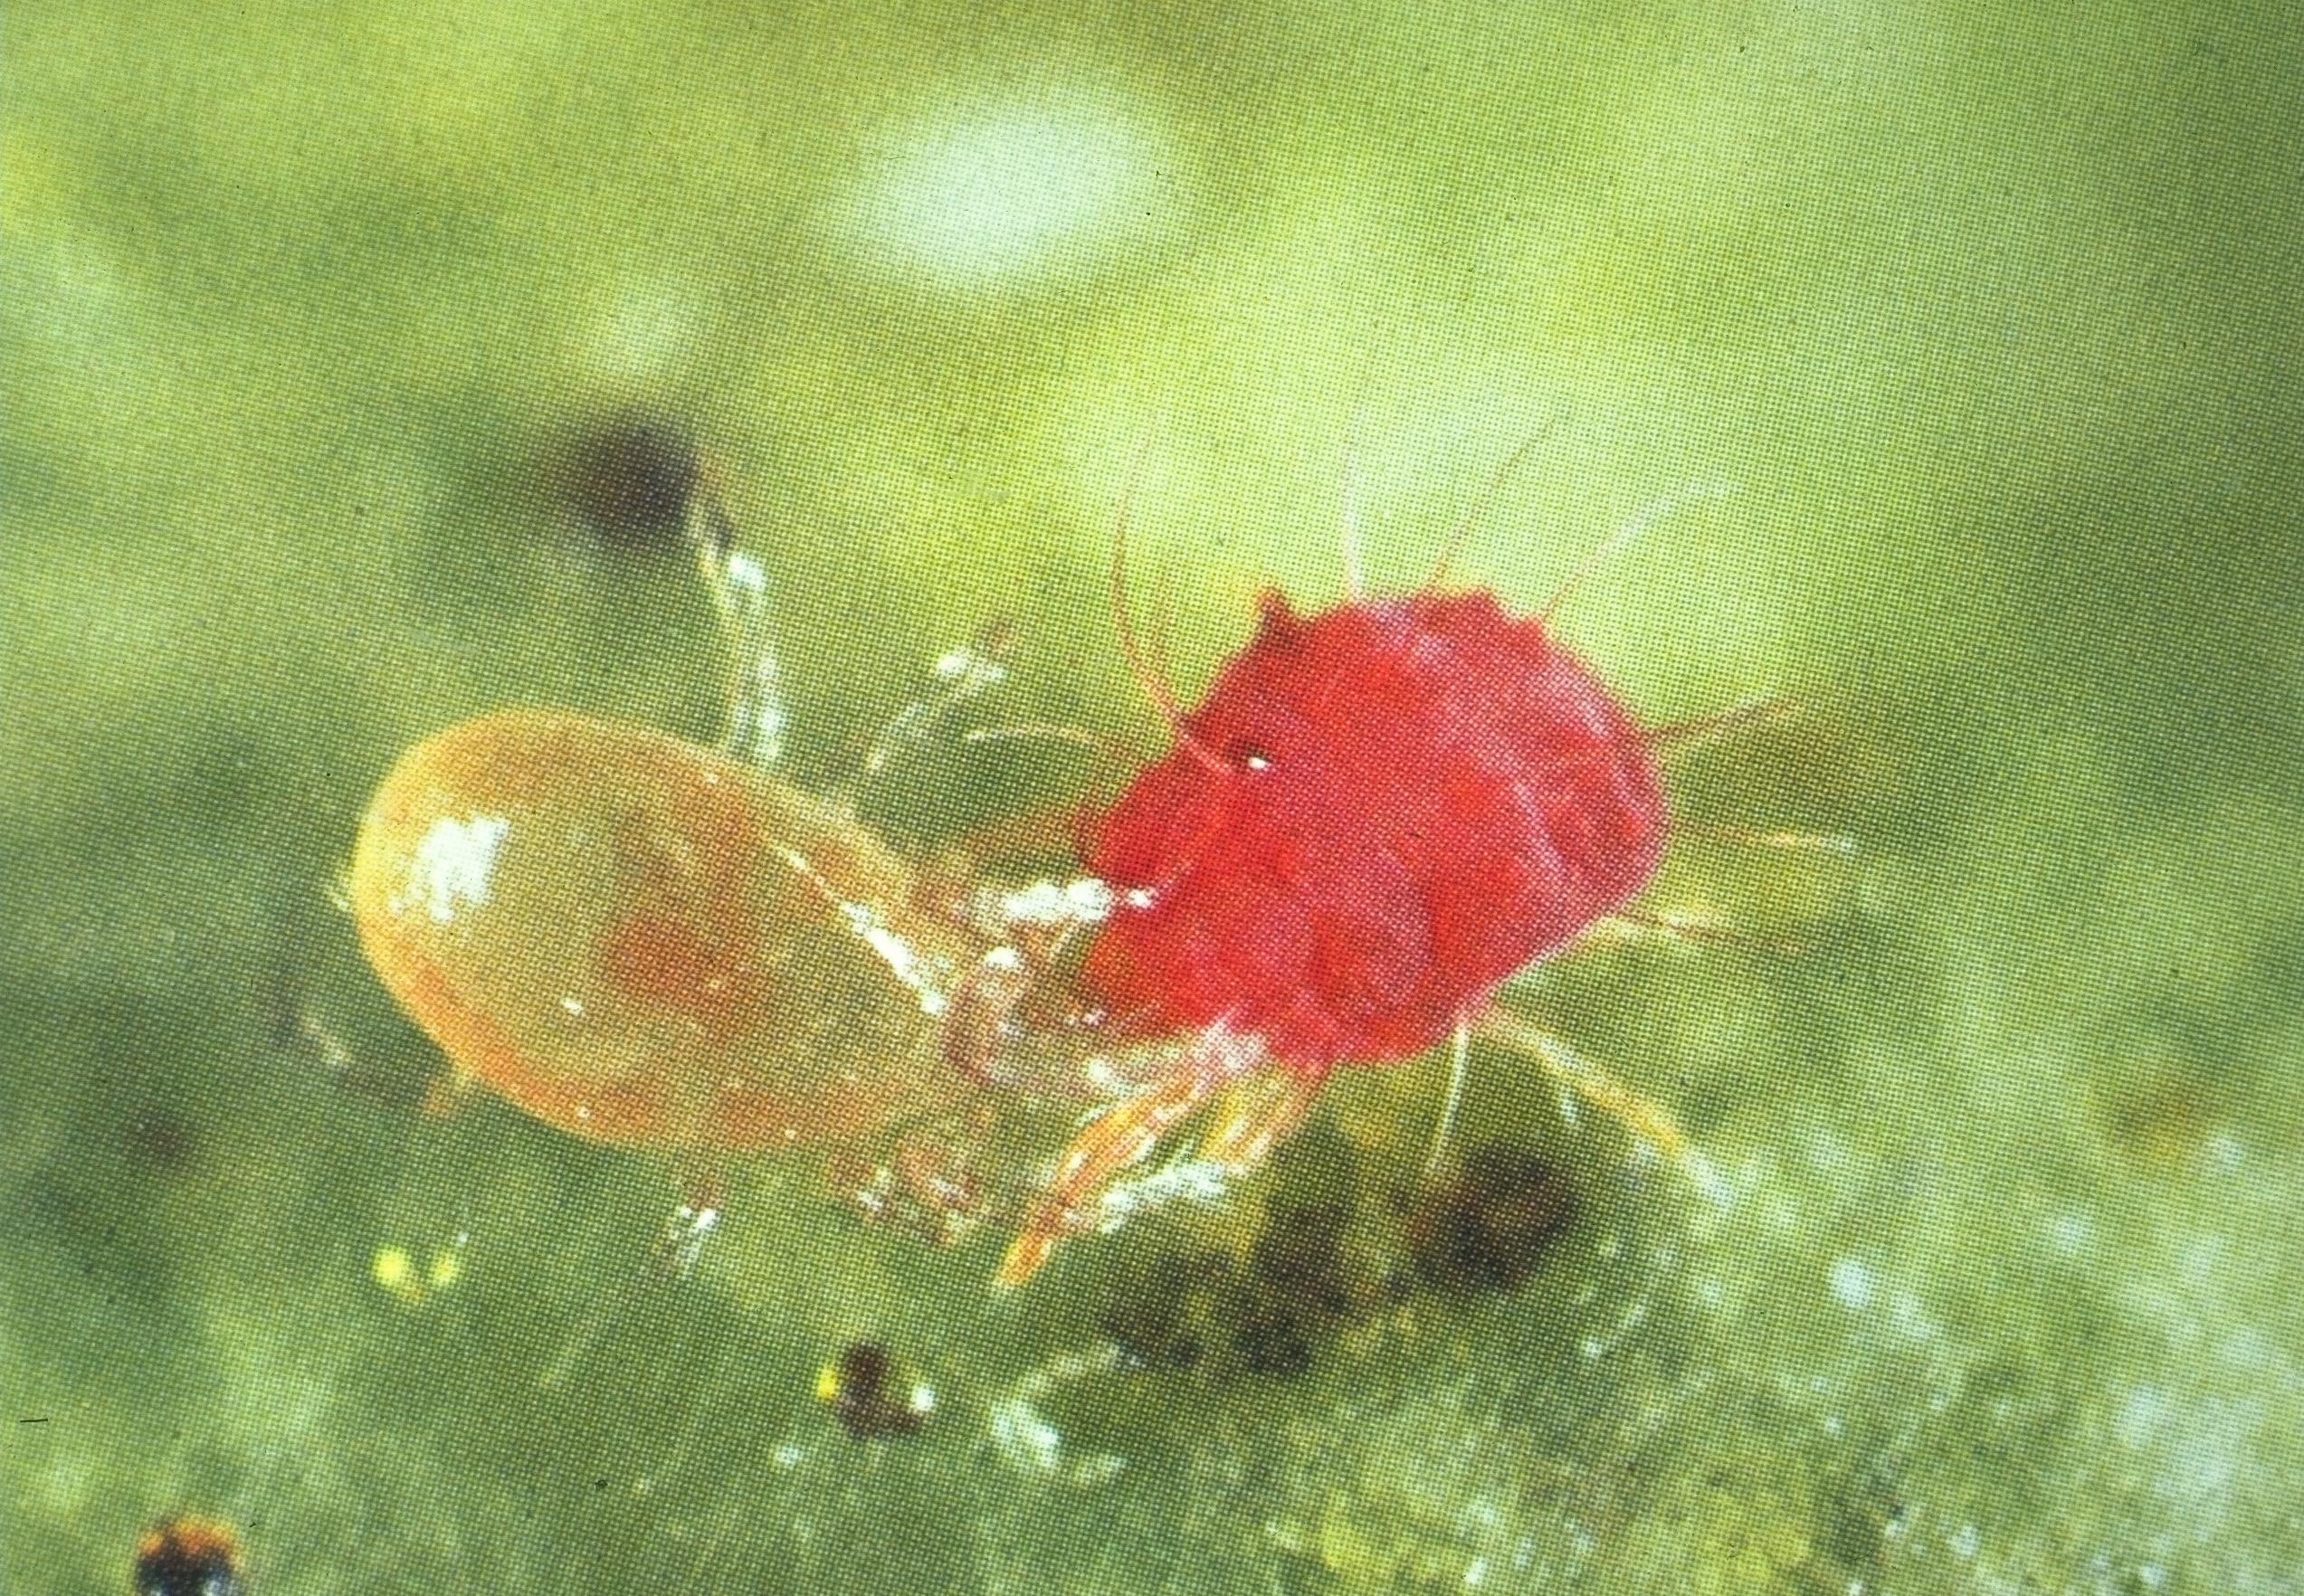 predator mite with prey